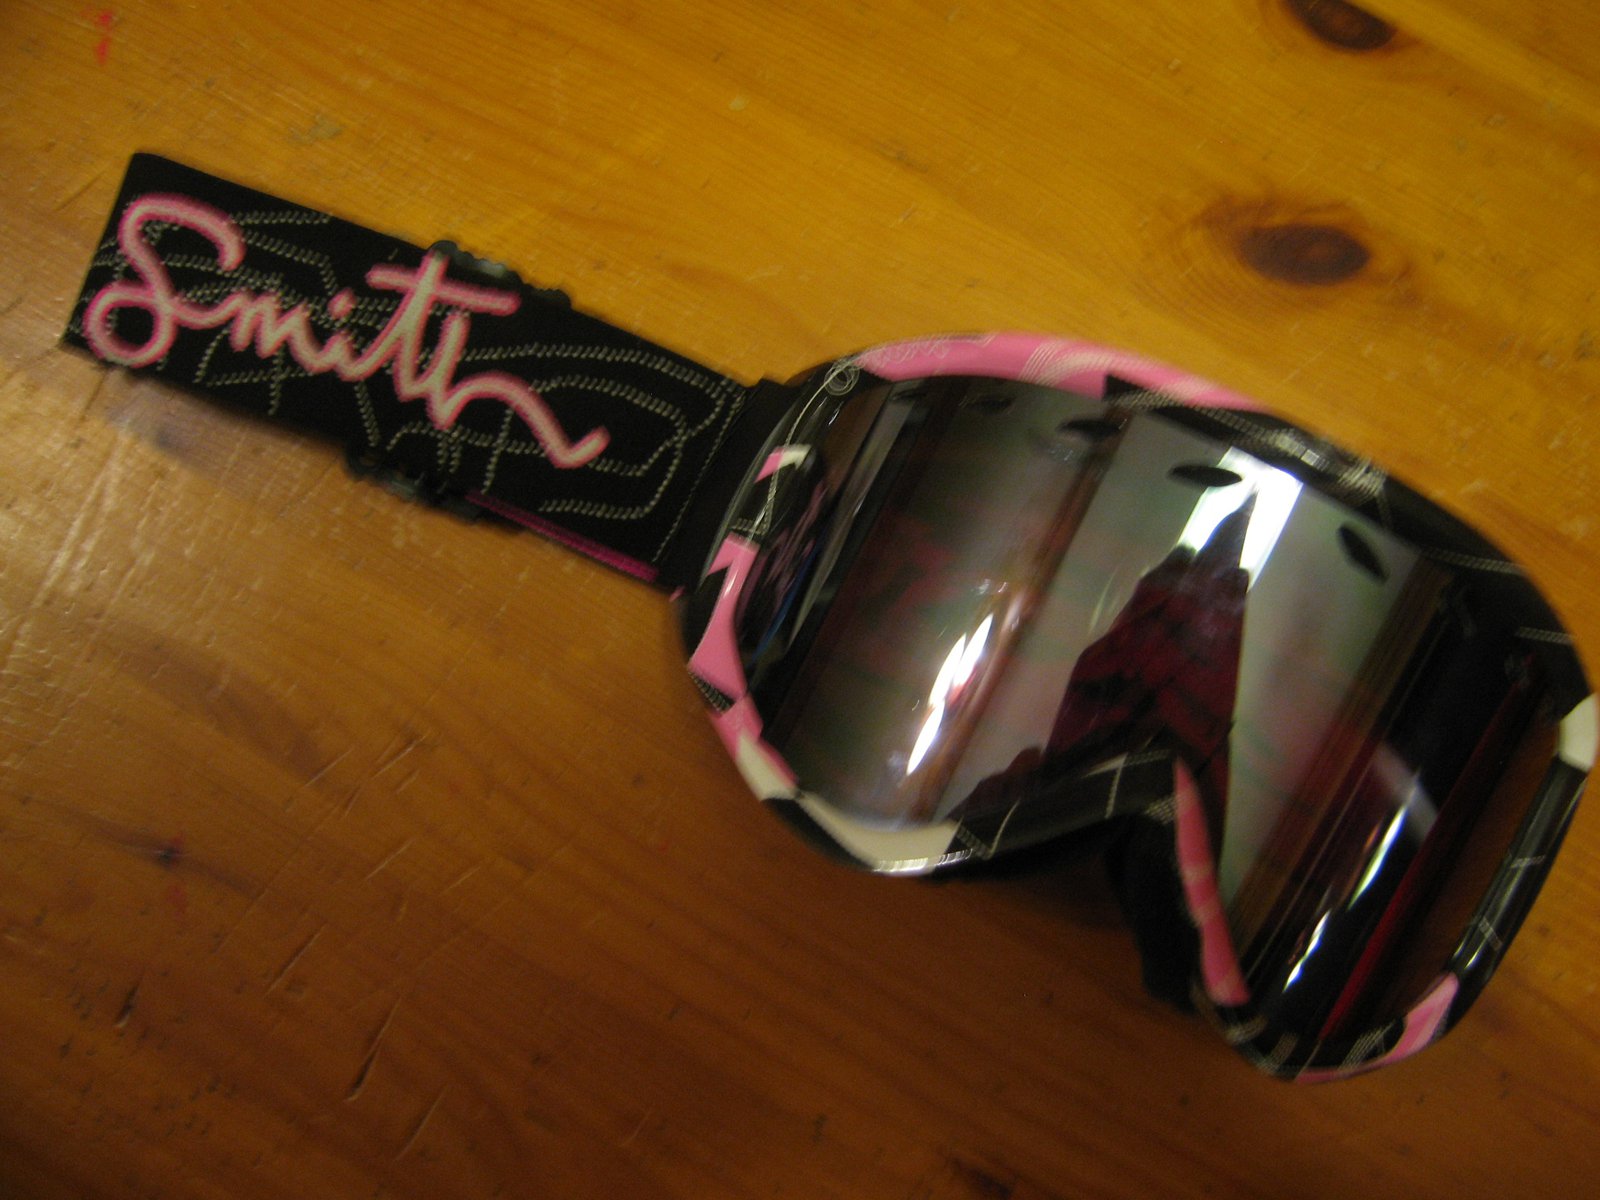 Smith ski goggles